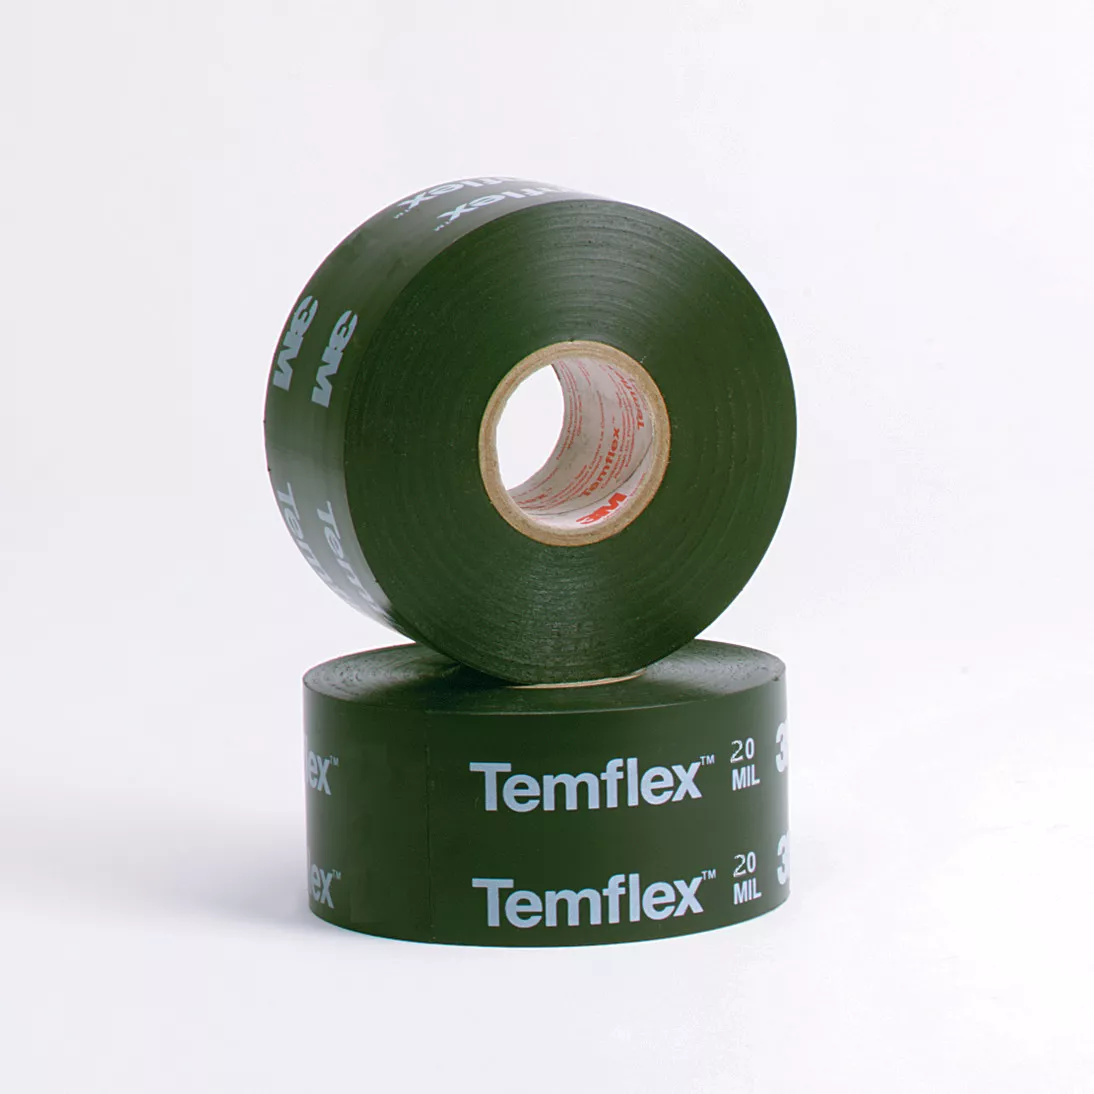 3M™ Temflex™ Vinyl Corrosion Protection Tape 1200, 2 in x 100 ft,
Printed, Black, 12 rolls/Case